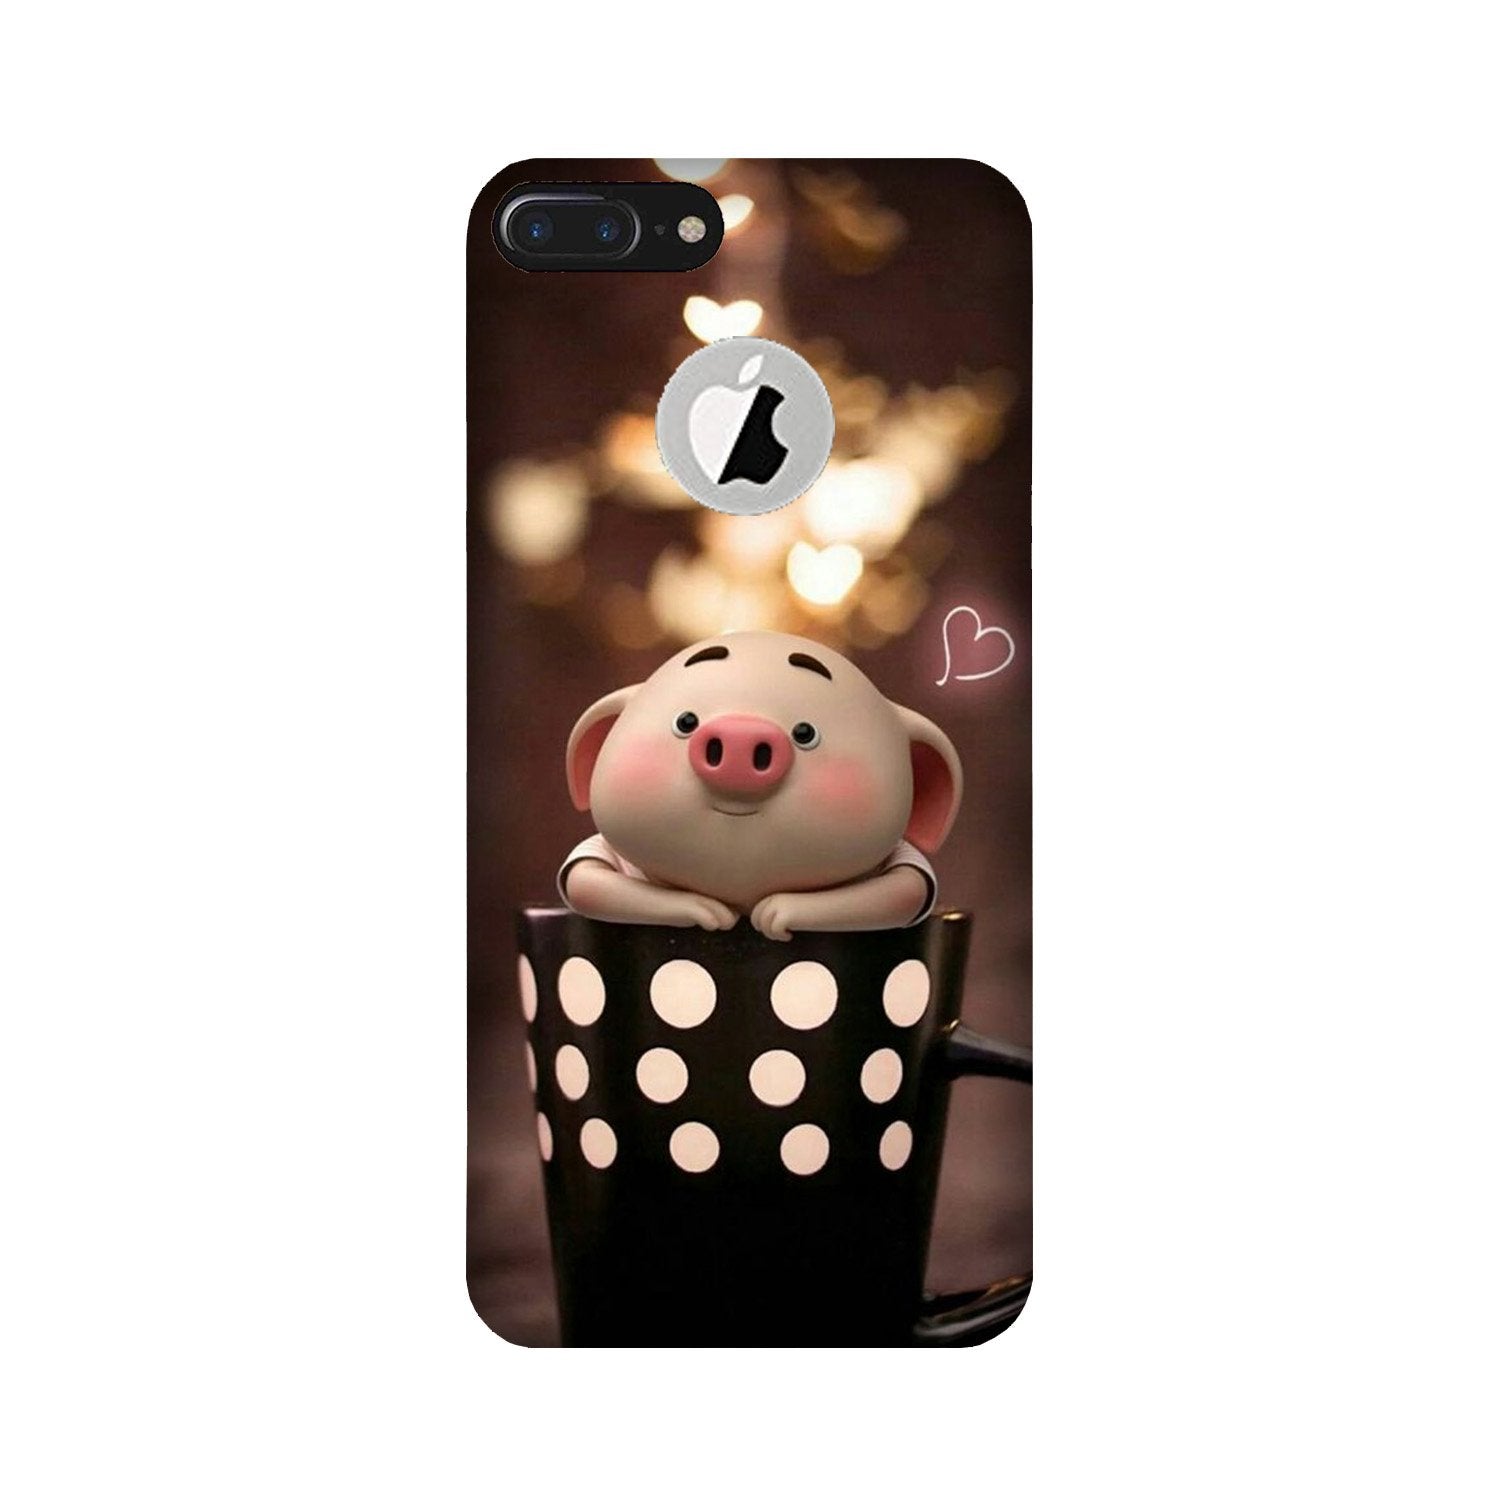 Cute Bunny Case for iPhone 7 Plus logo cut (Design No. 213)